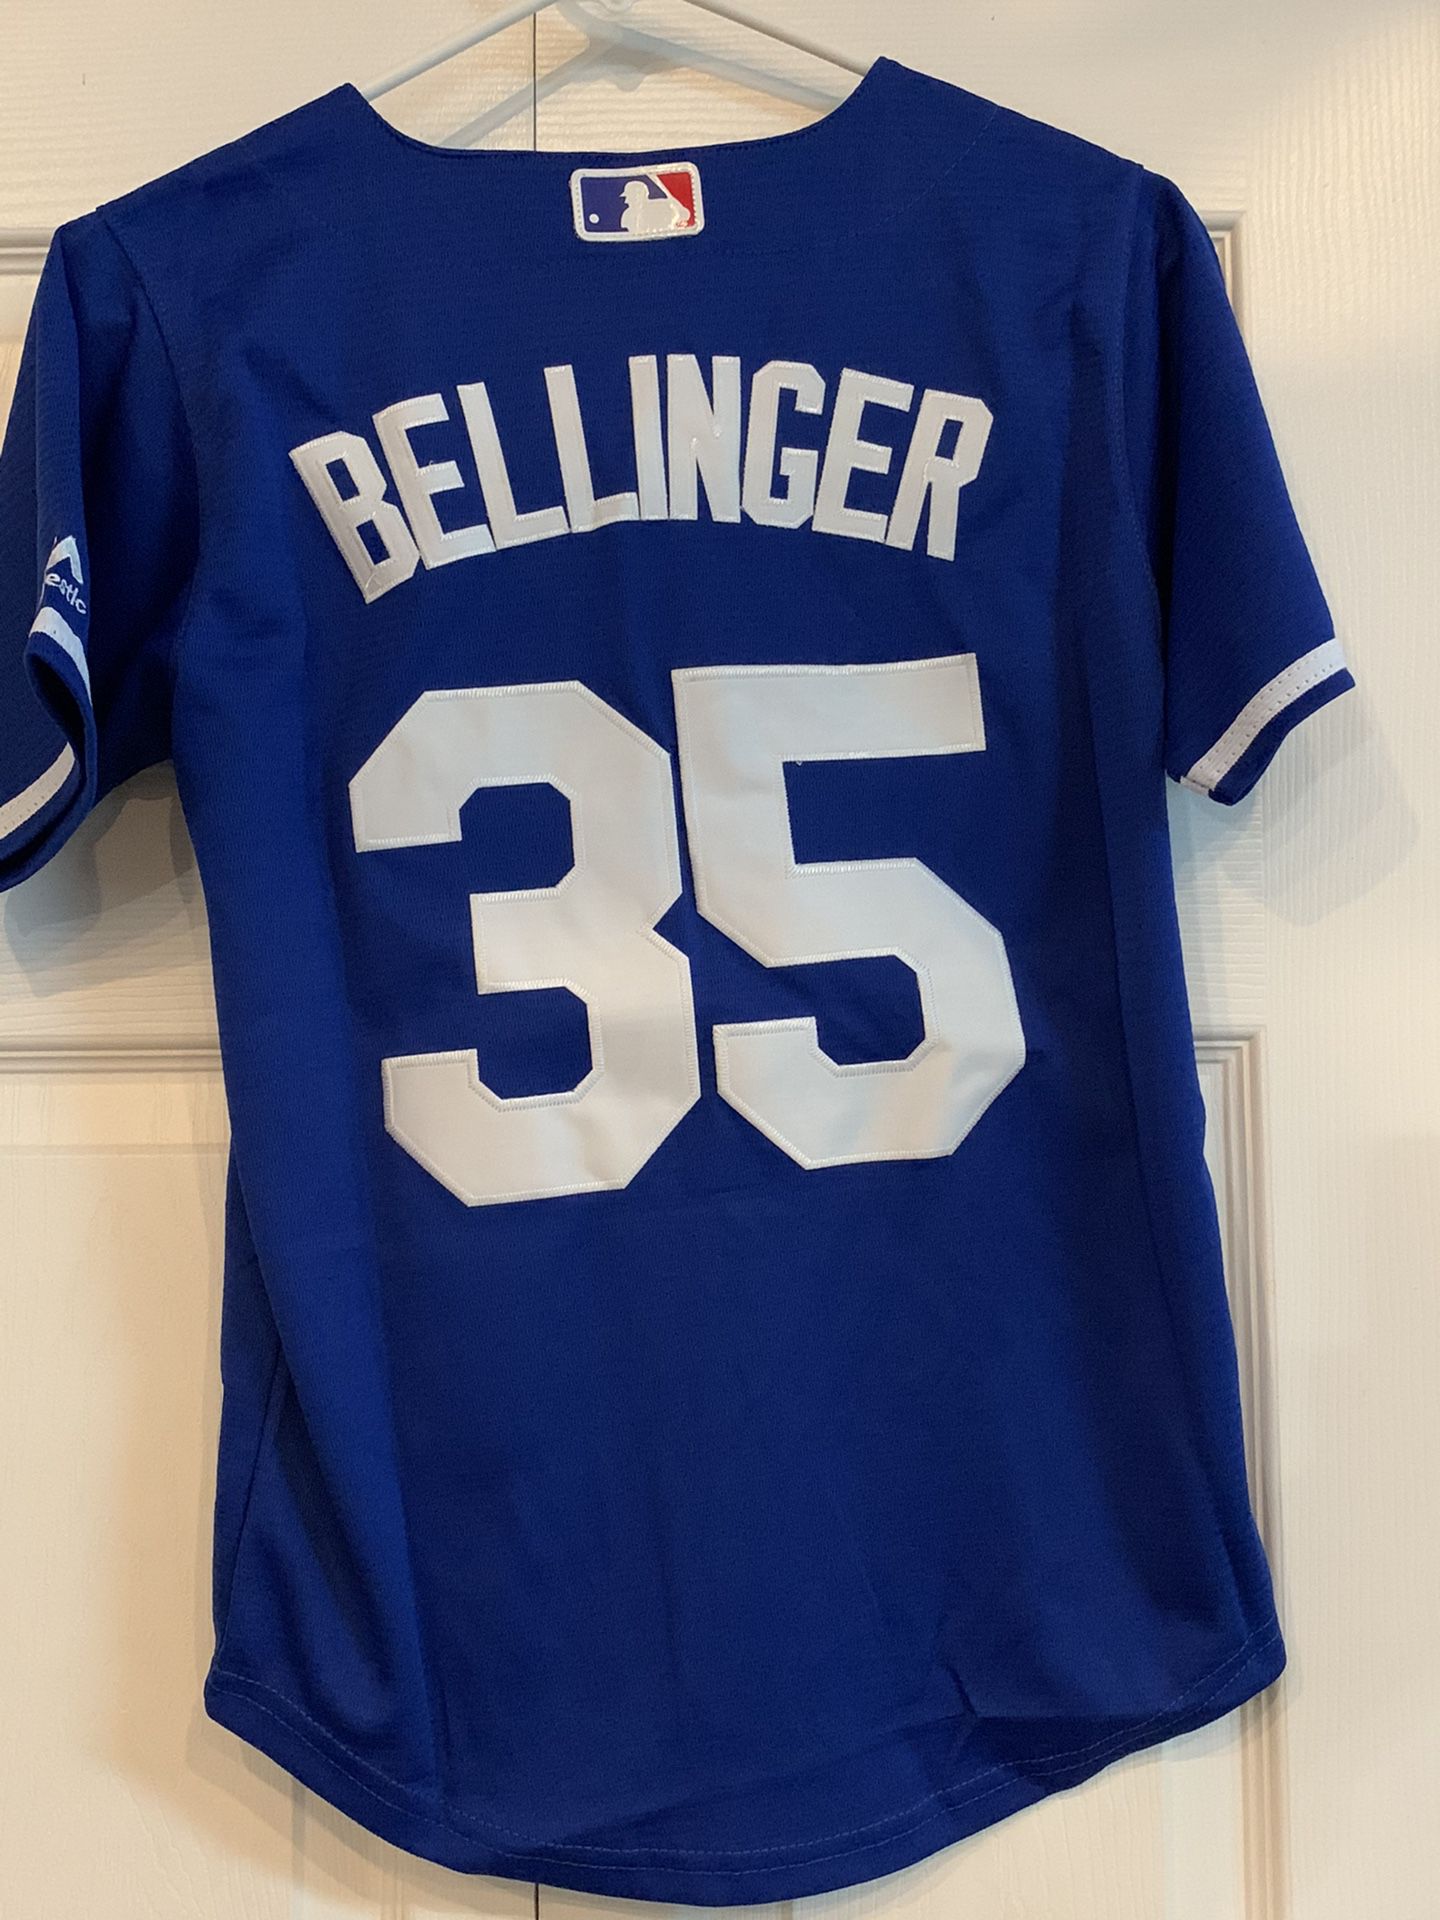 Youth Small Cody Bellinger Baseball Jersey